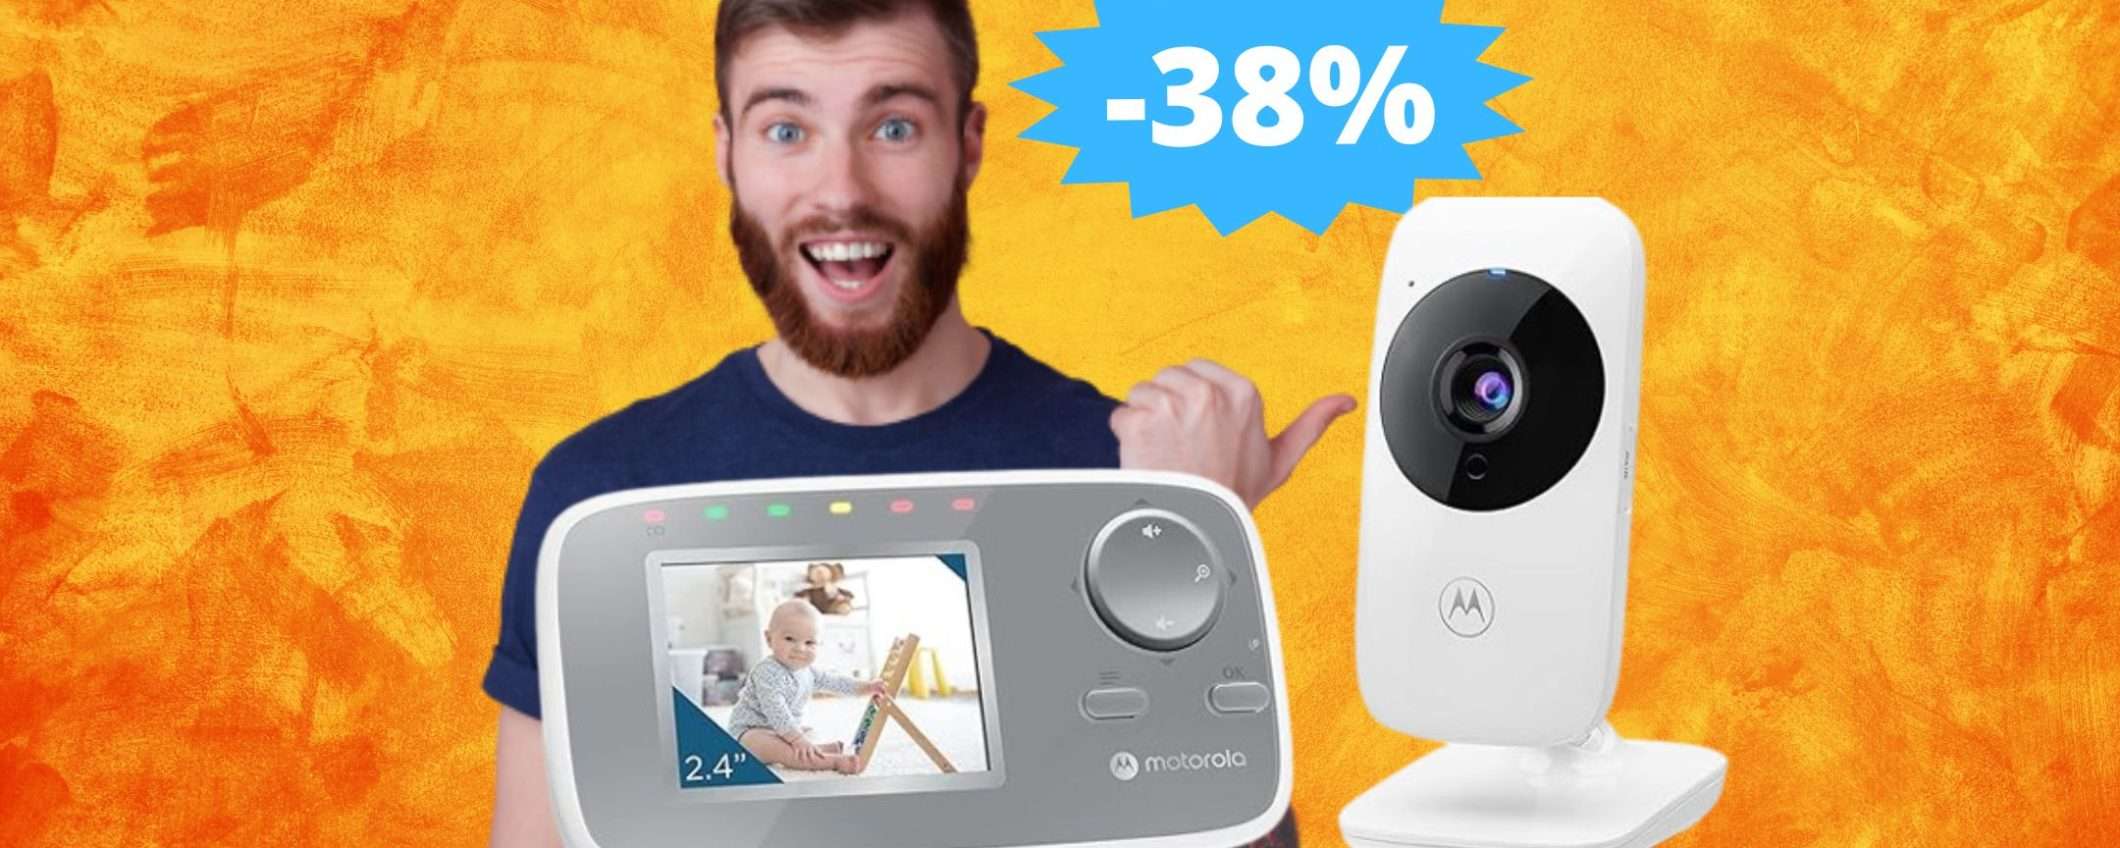 Motorola Nursery Baby Monitor: sconto IMBATTIBILE del 38%